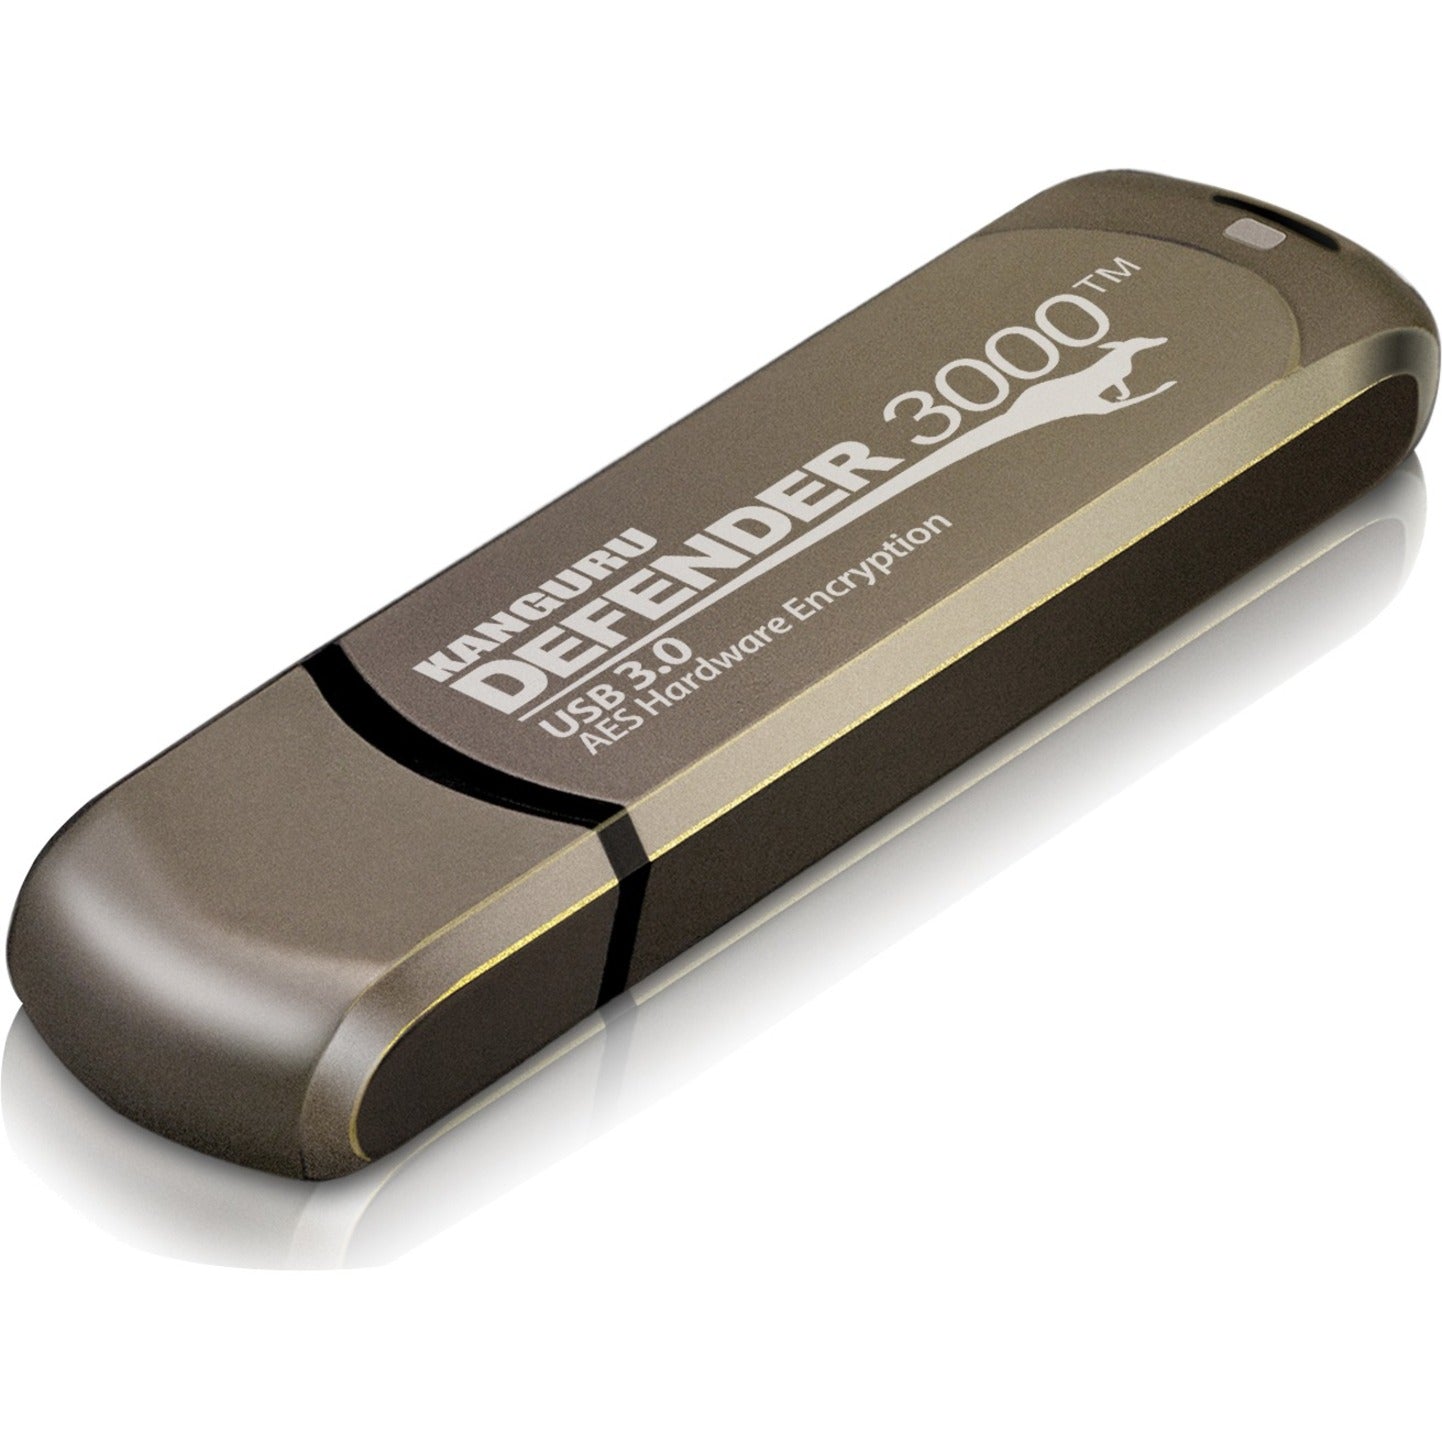 Kanguru KDF3000-128G Defender 3000 FIPS 140-2 Certified Level 3 SuperSpeed USB 3.0 Flash Drive, 128GB